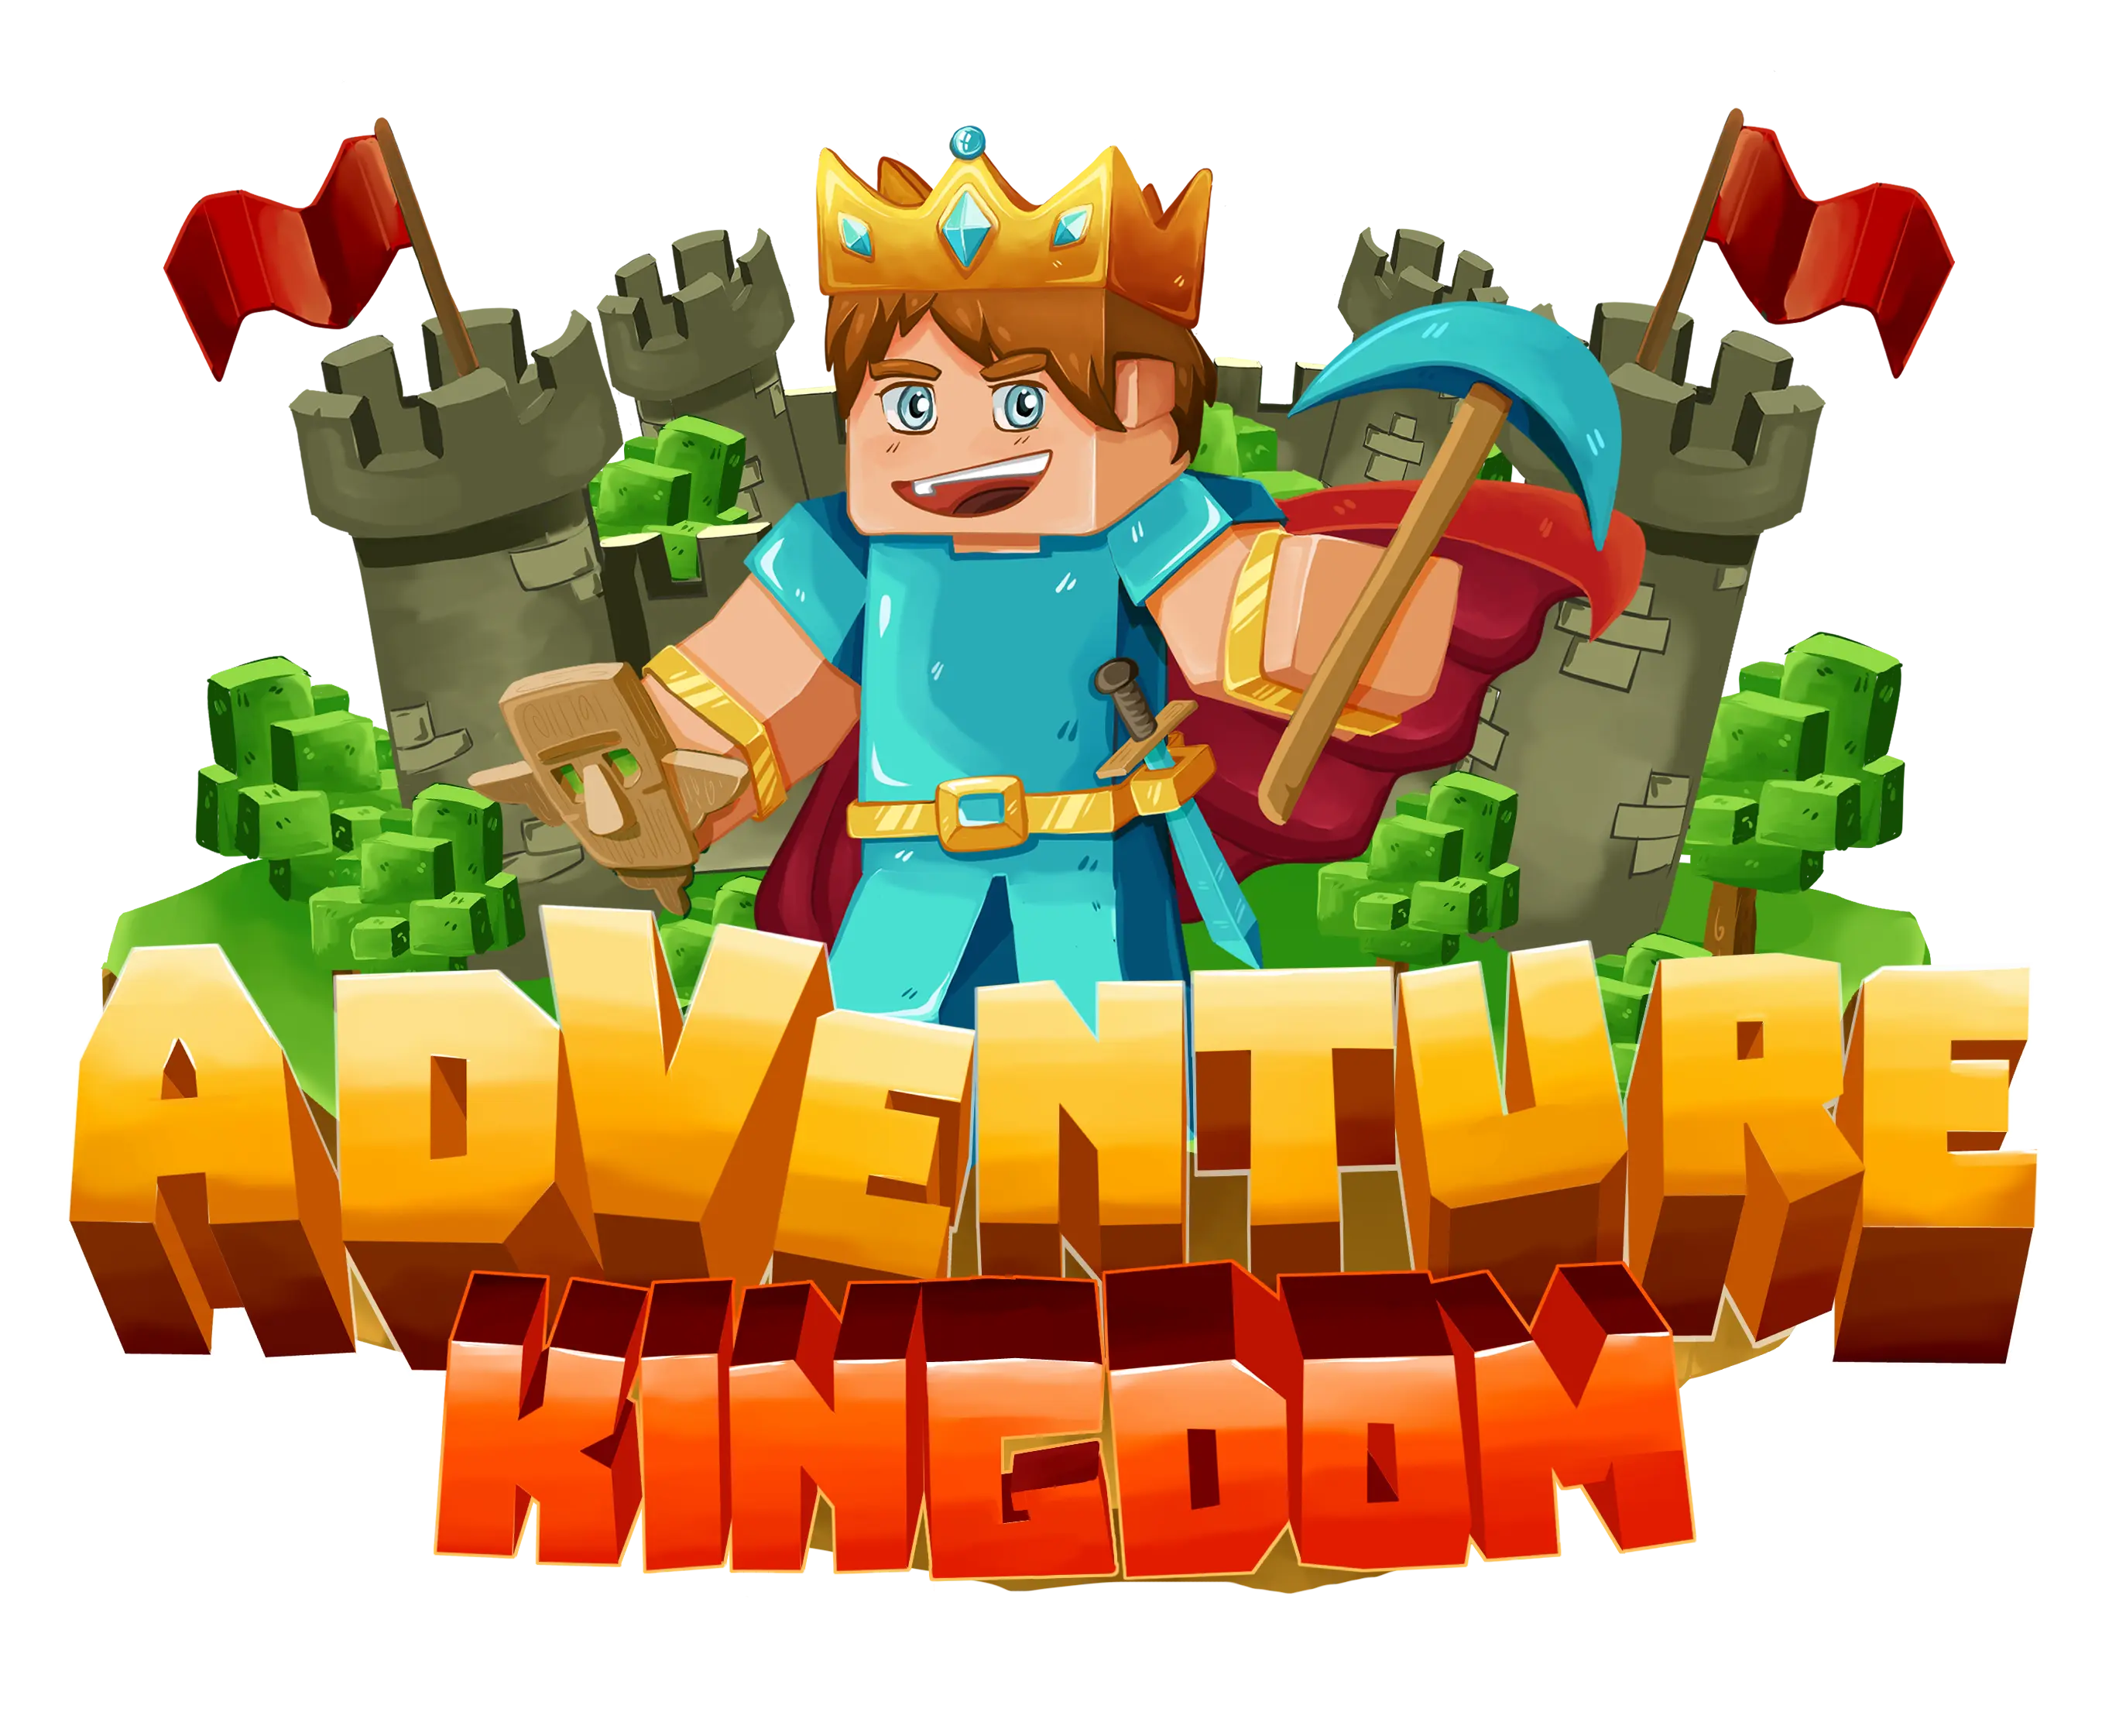 Adventure Kingdom